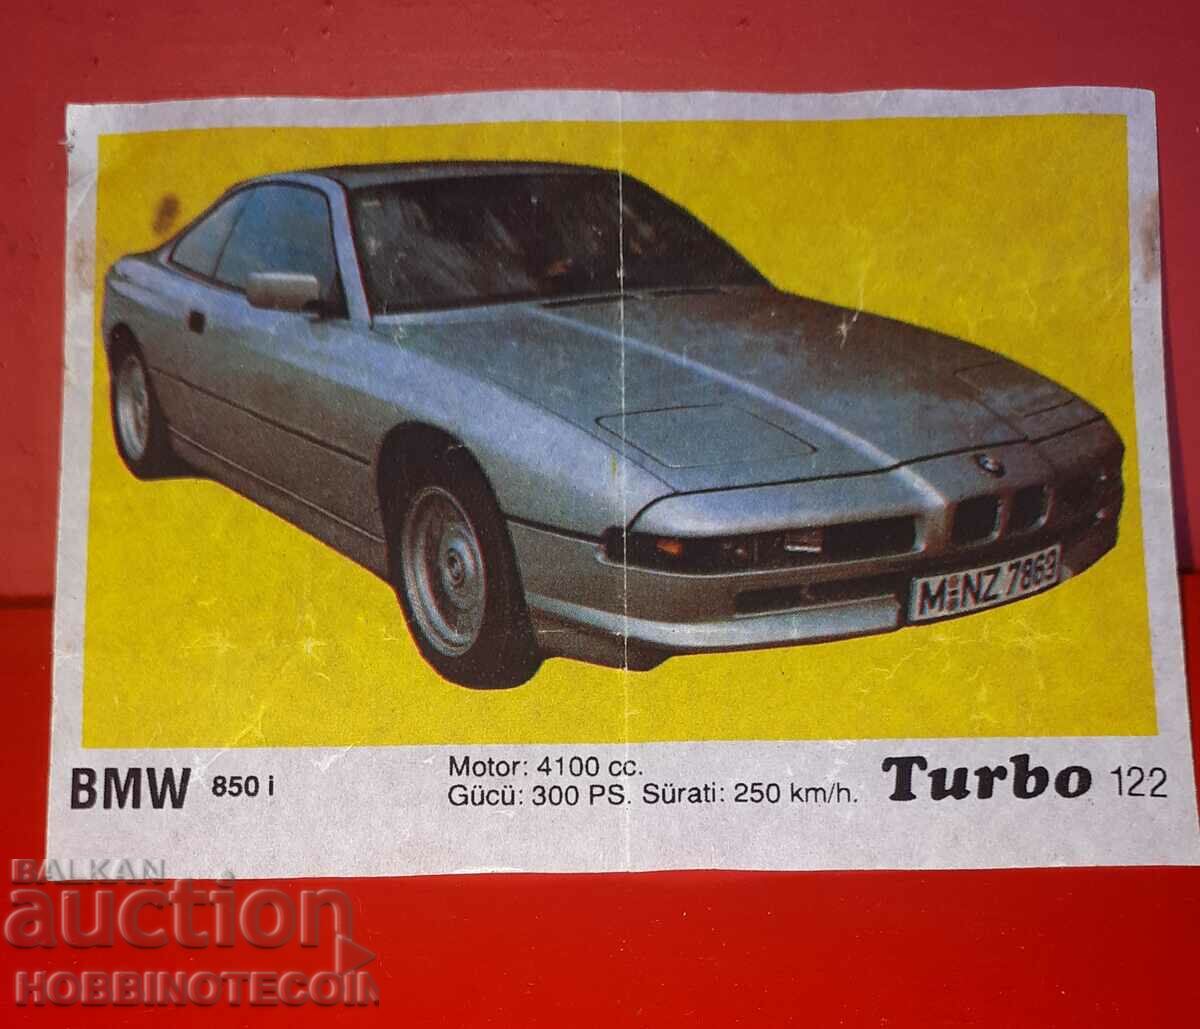 PICTURE TURBO TURBO N 122 BMW 850 I